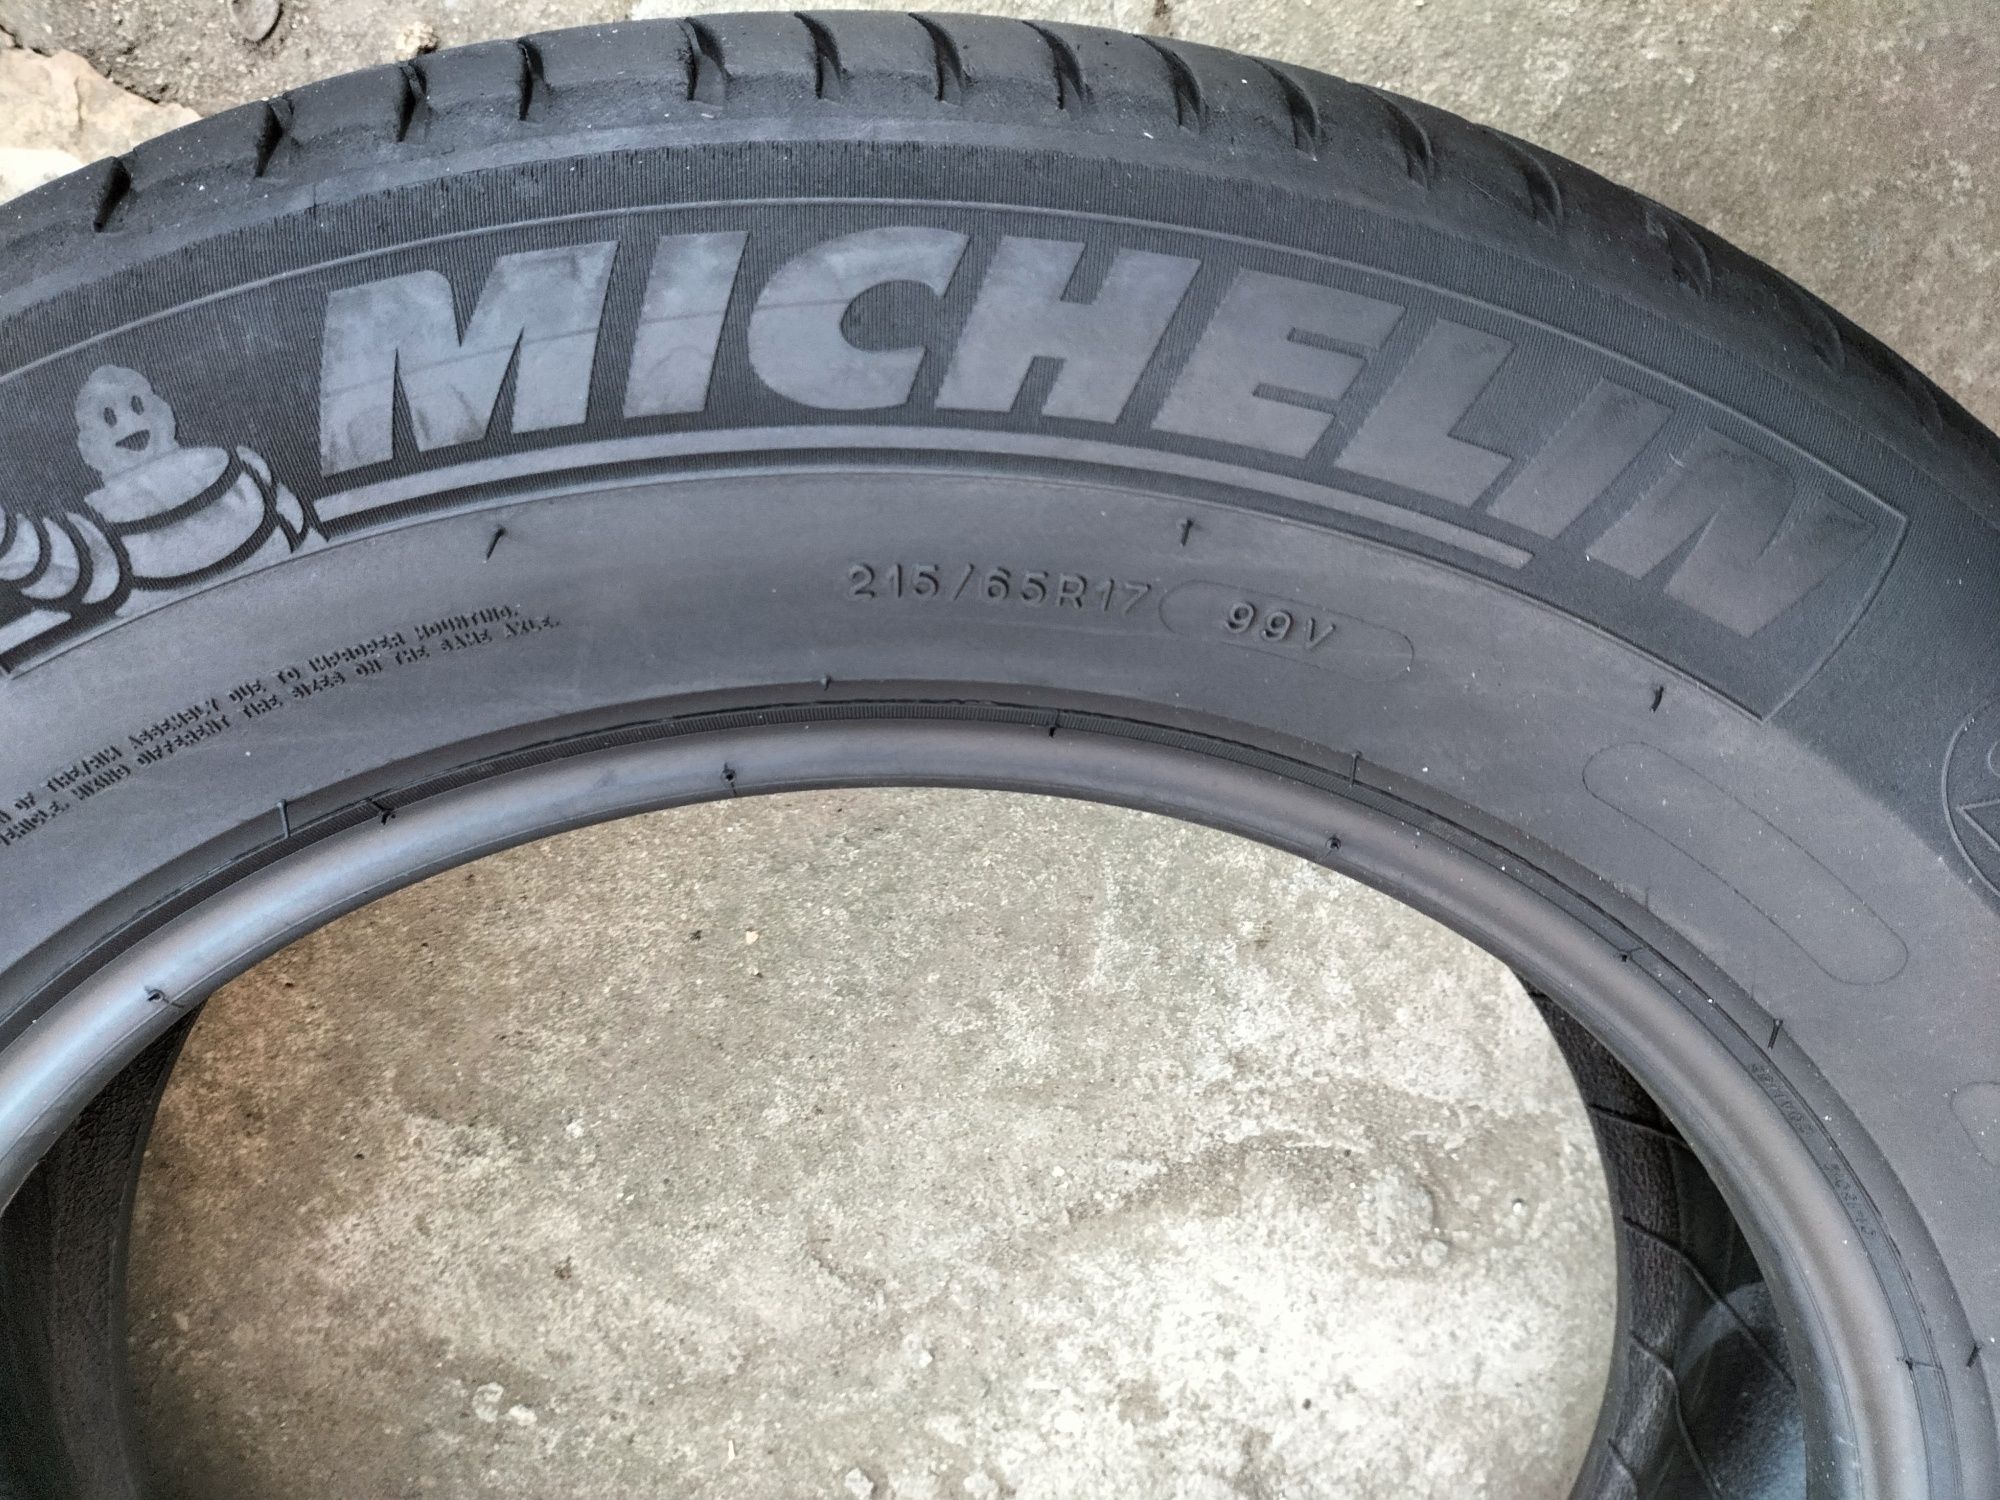 Cauciucuri de vara Michelin 215 65 17